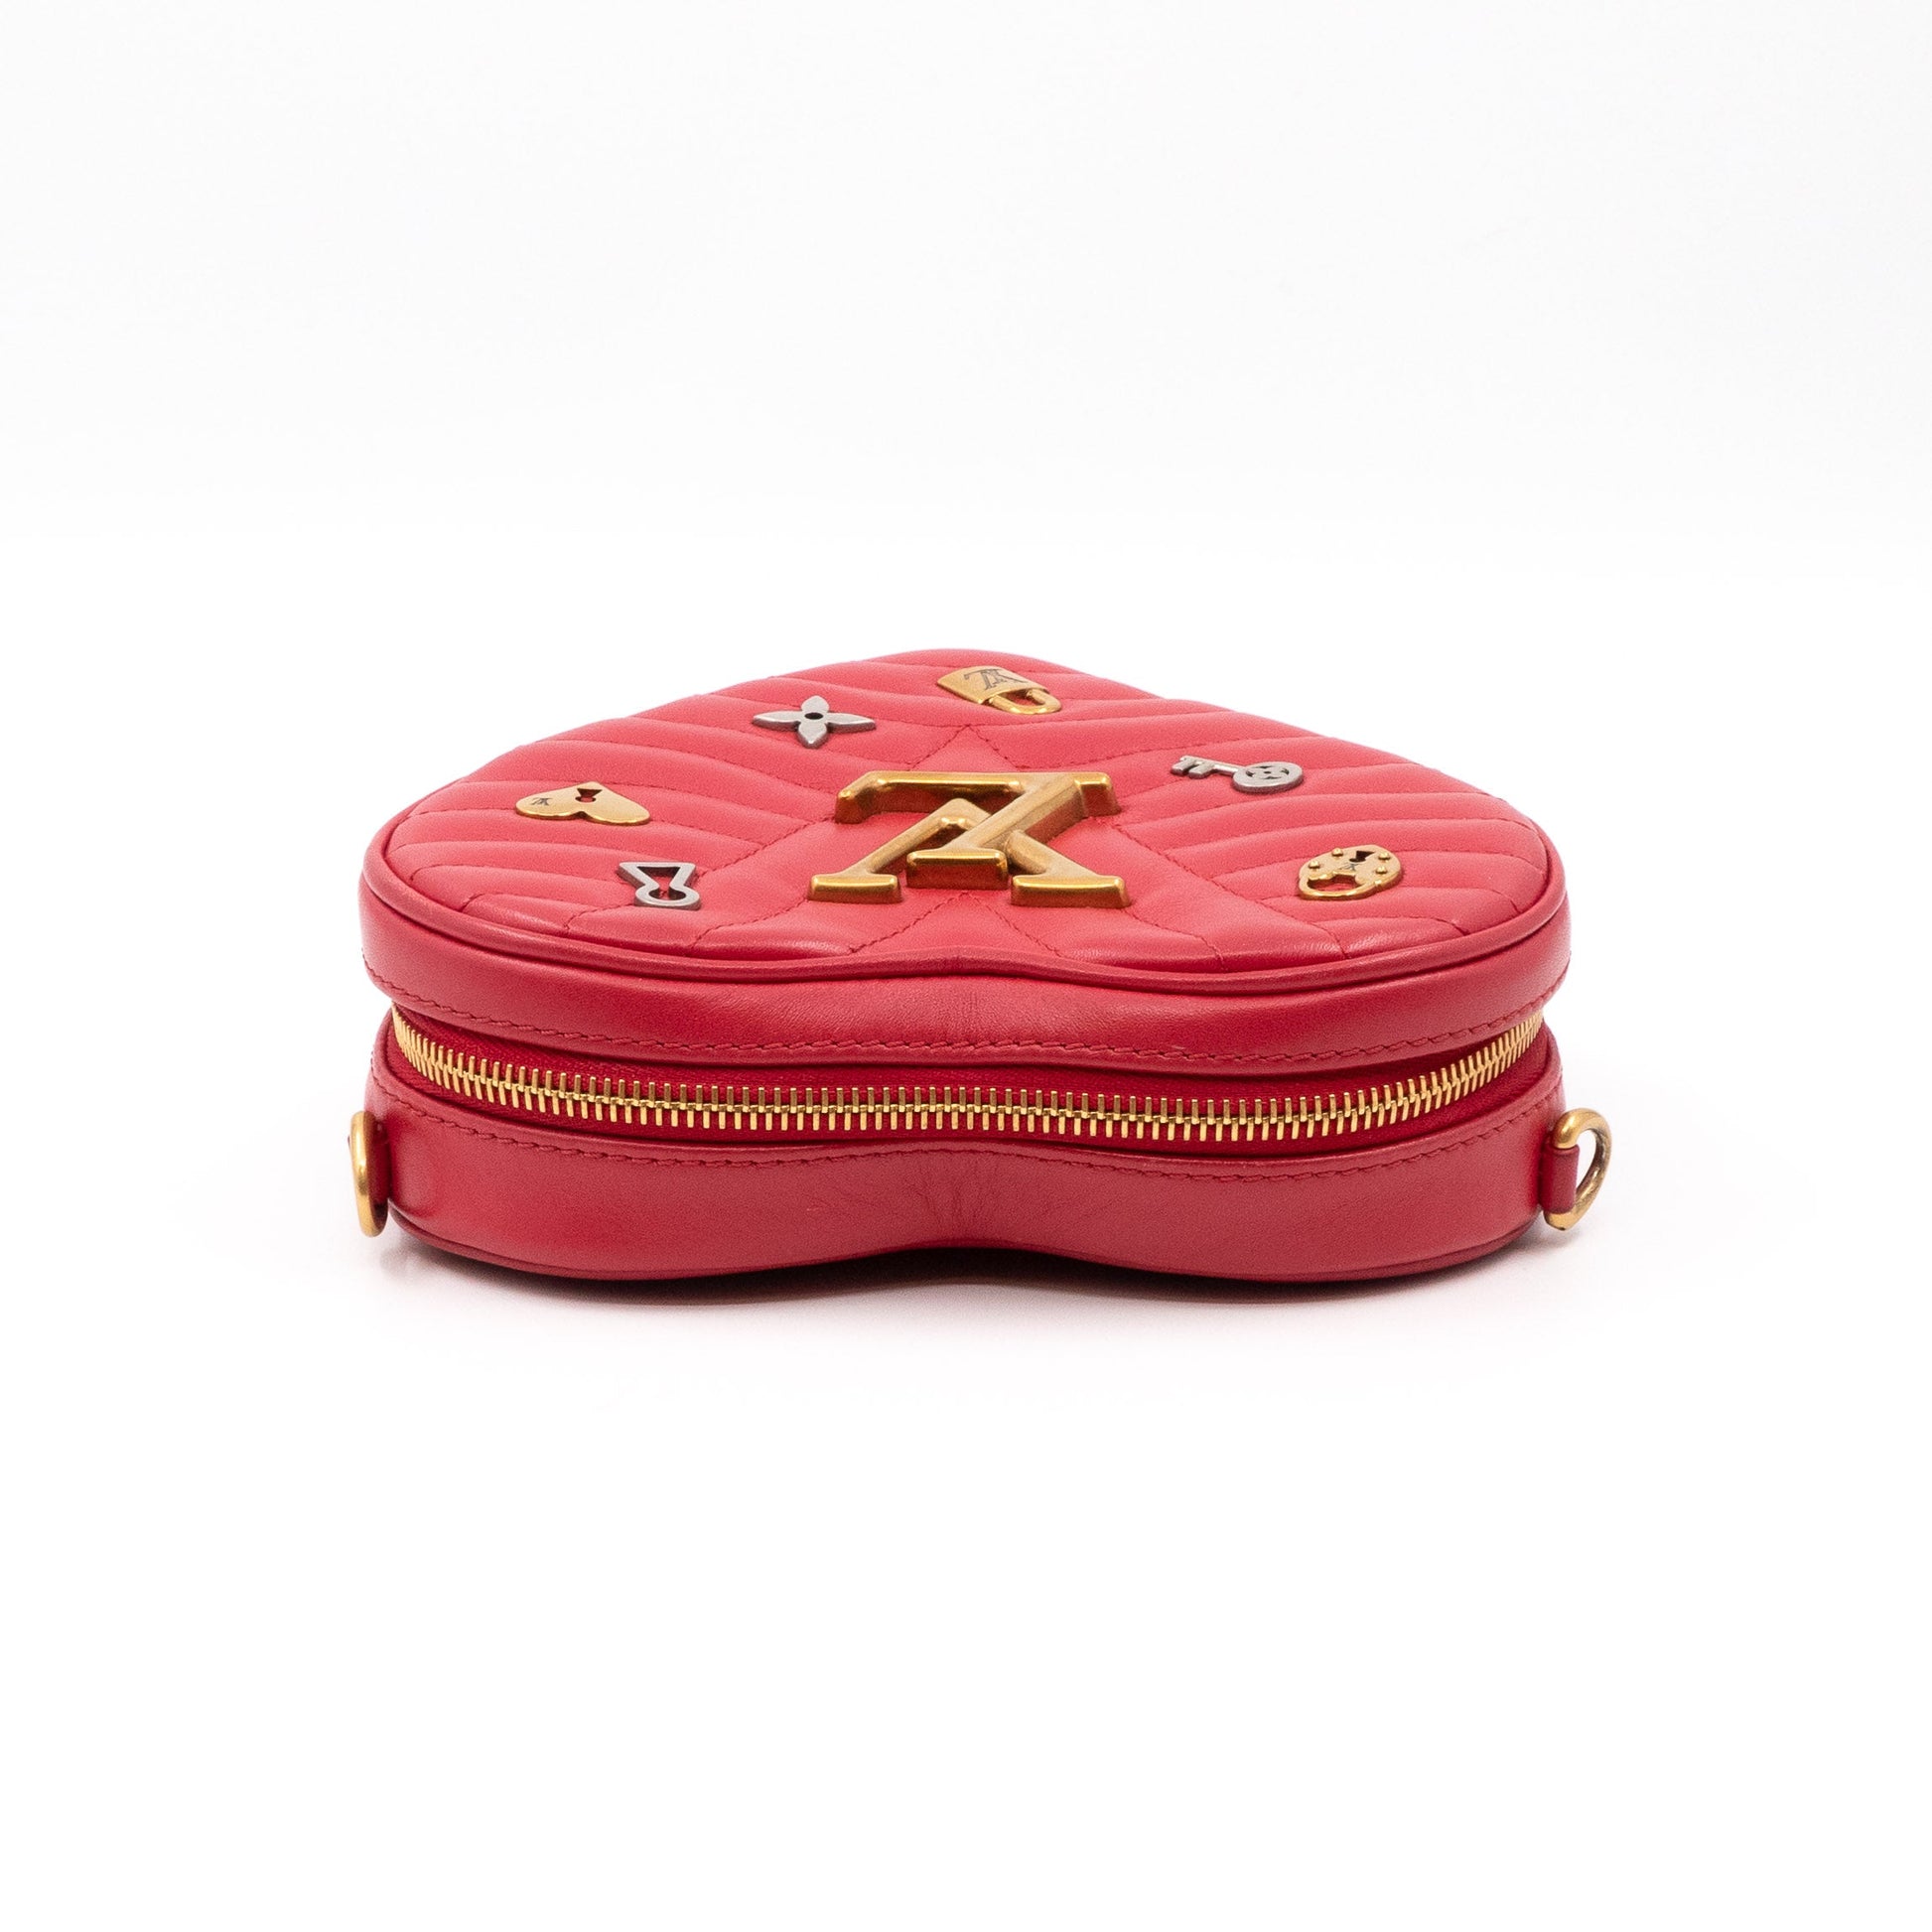 Louis Vuitton new wave heart bag handbag with shoulder strap